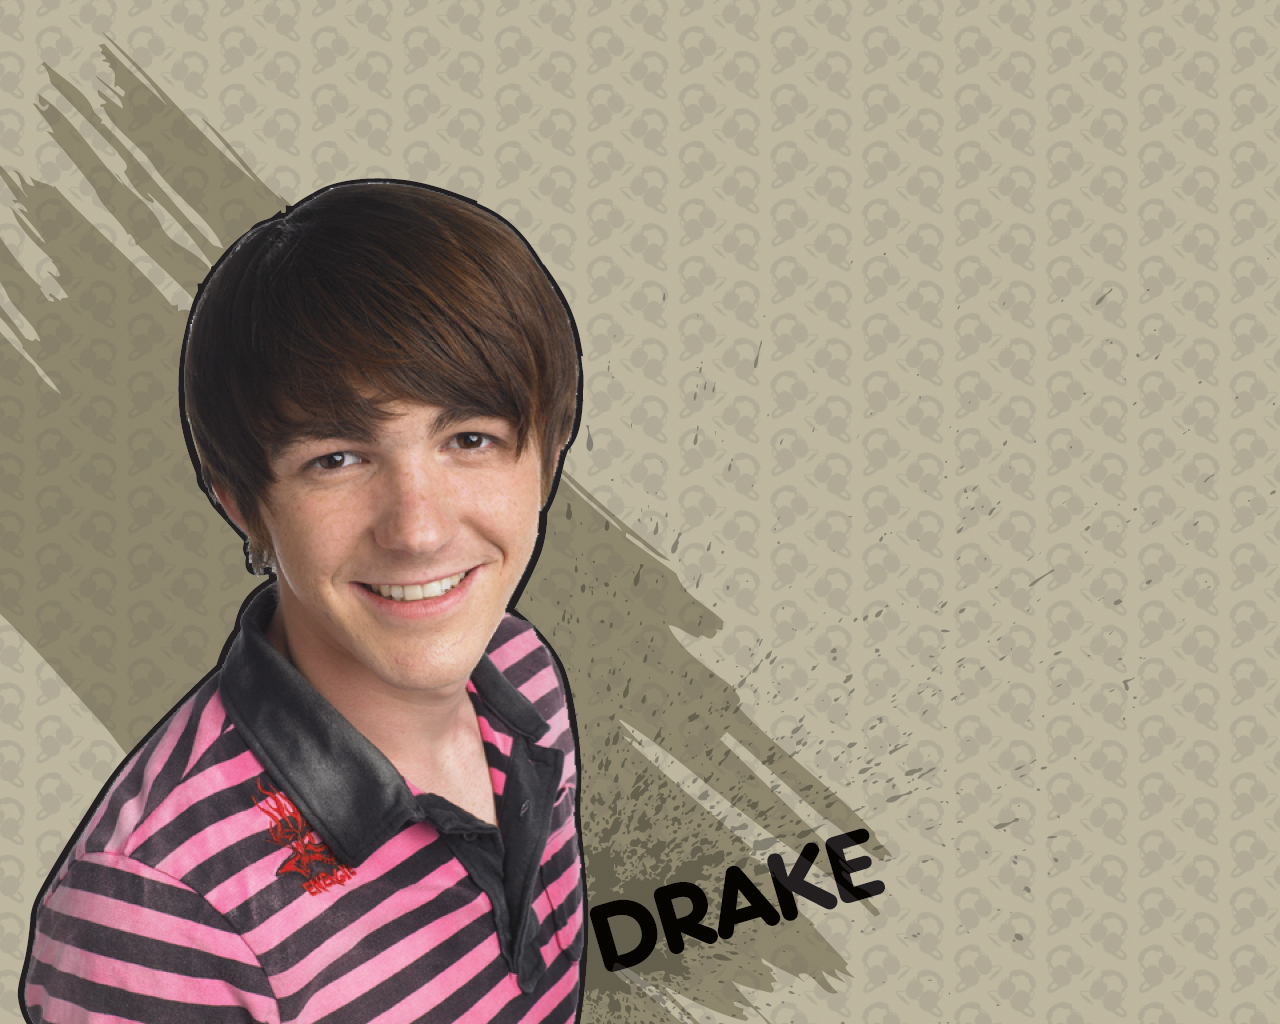 Drake+and+josh+wallpaper